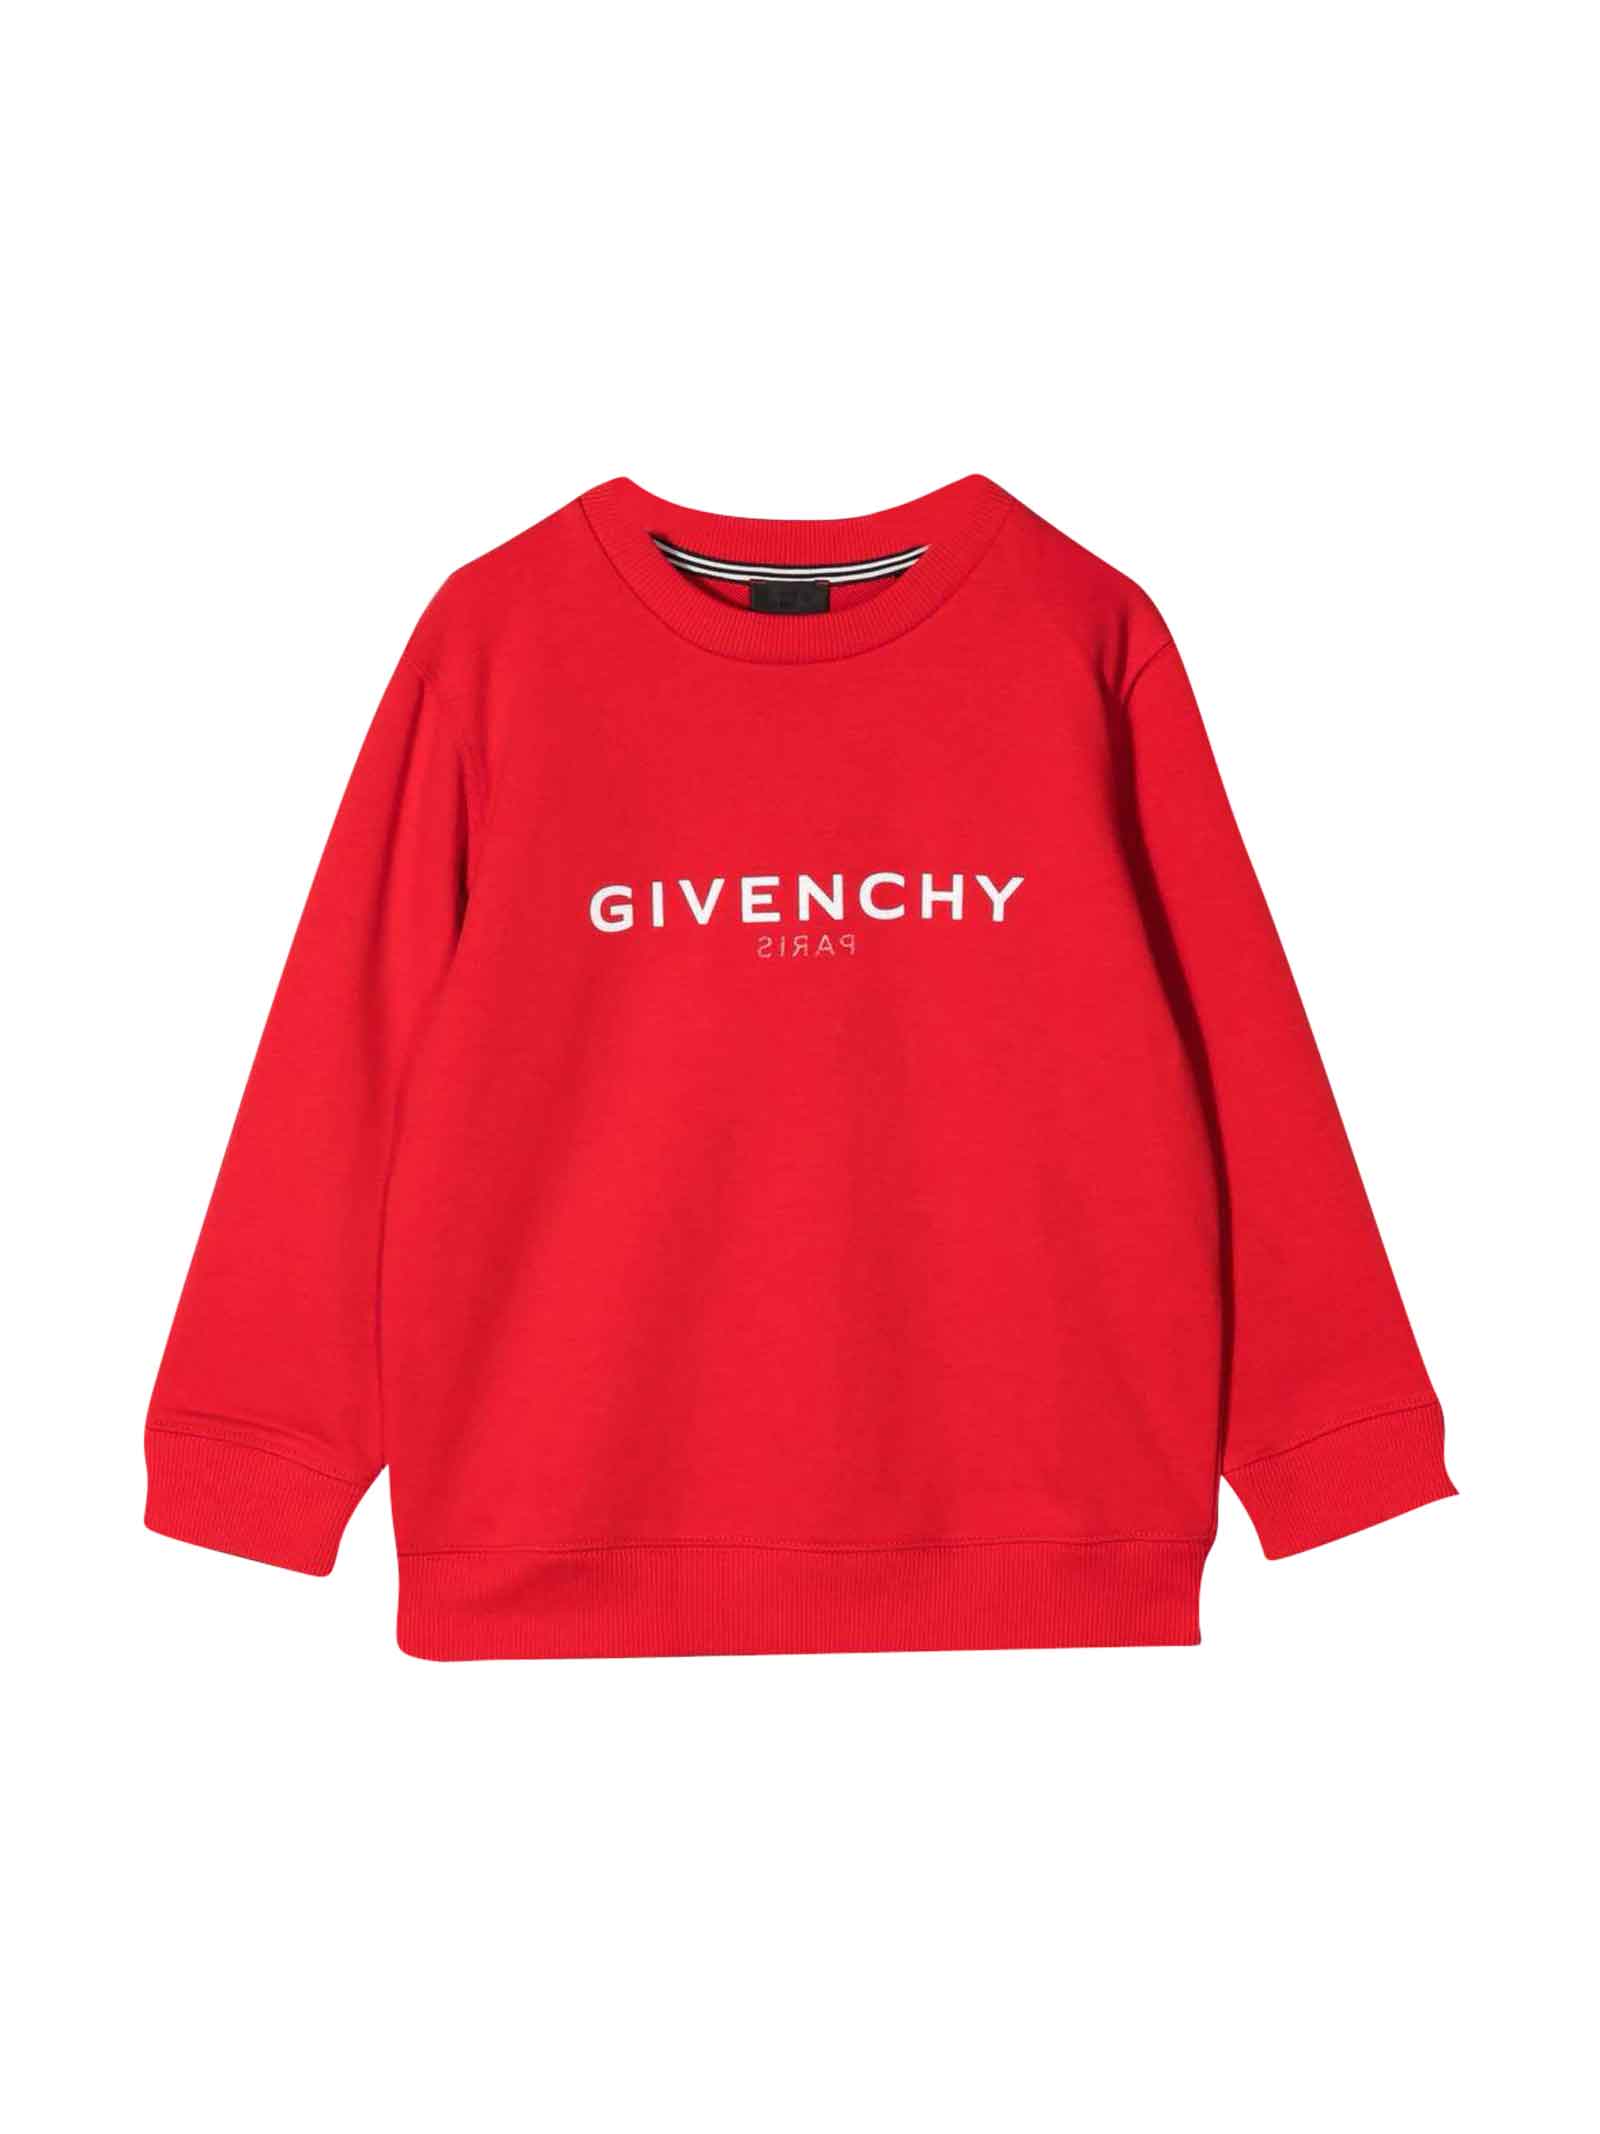 Givenchy Red Unisex Sweatshirt